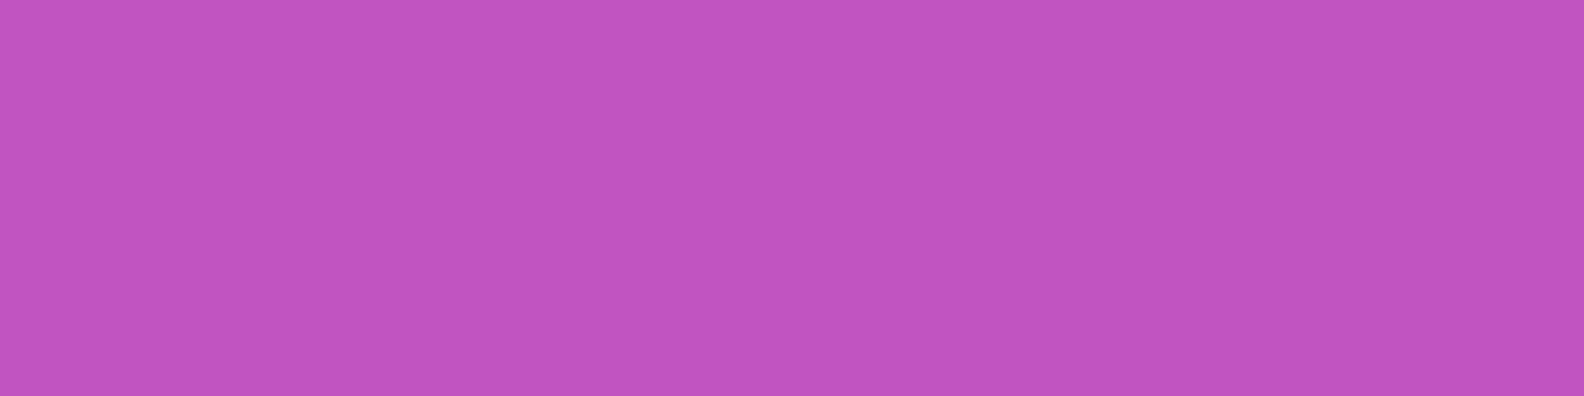 1584x396 Fuchsia Crayola Solid Color Background